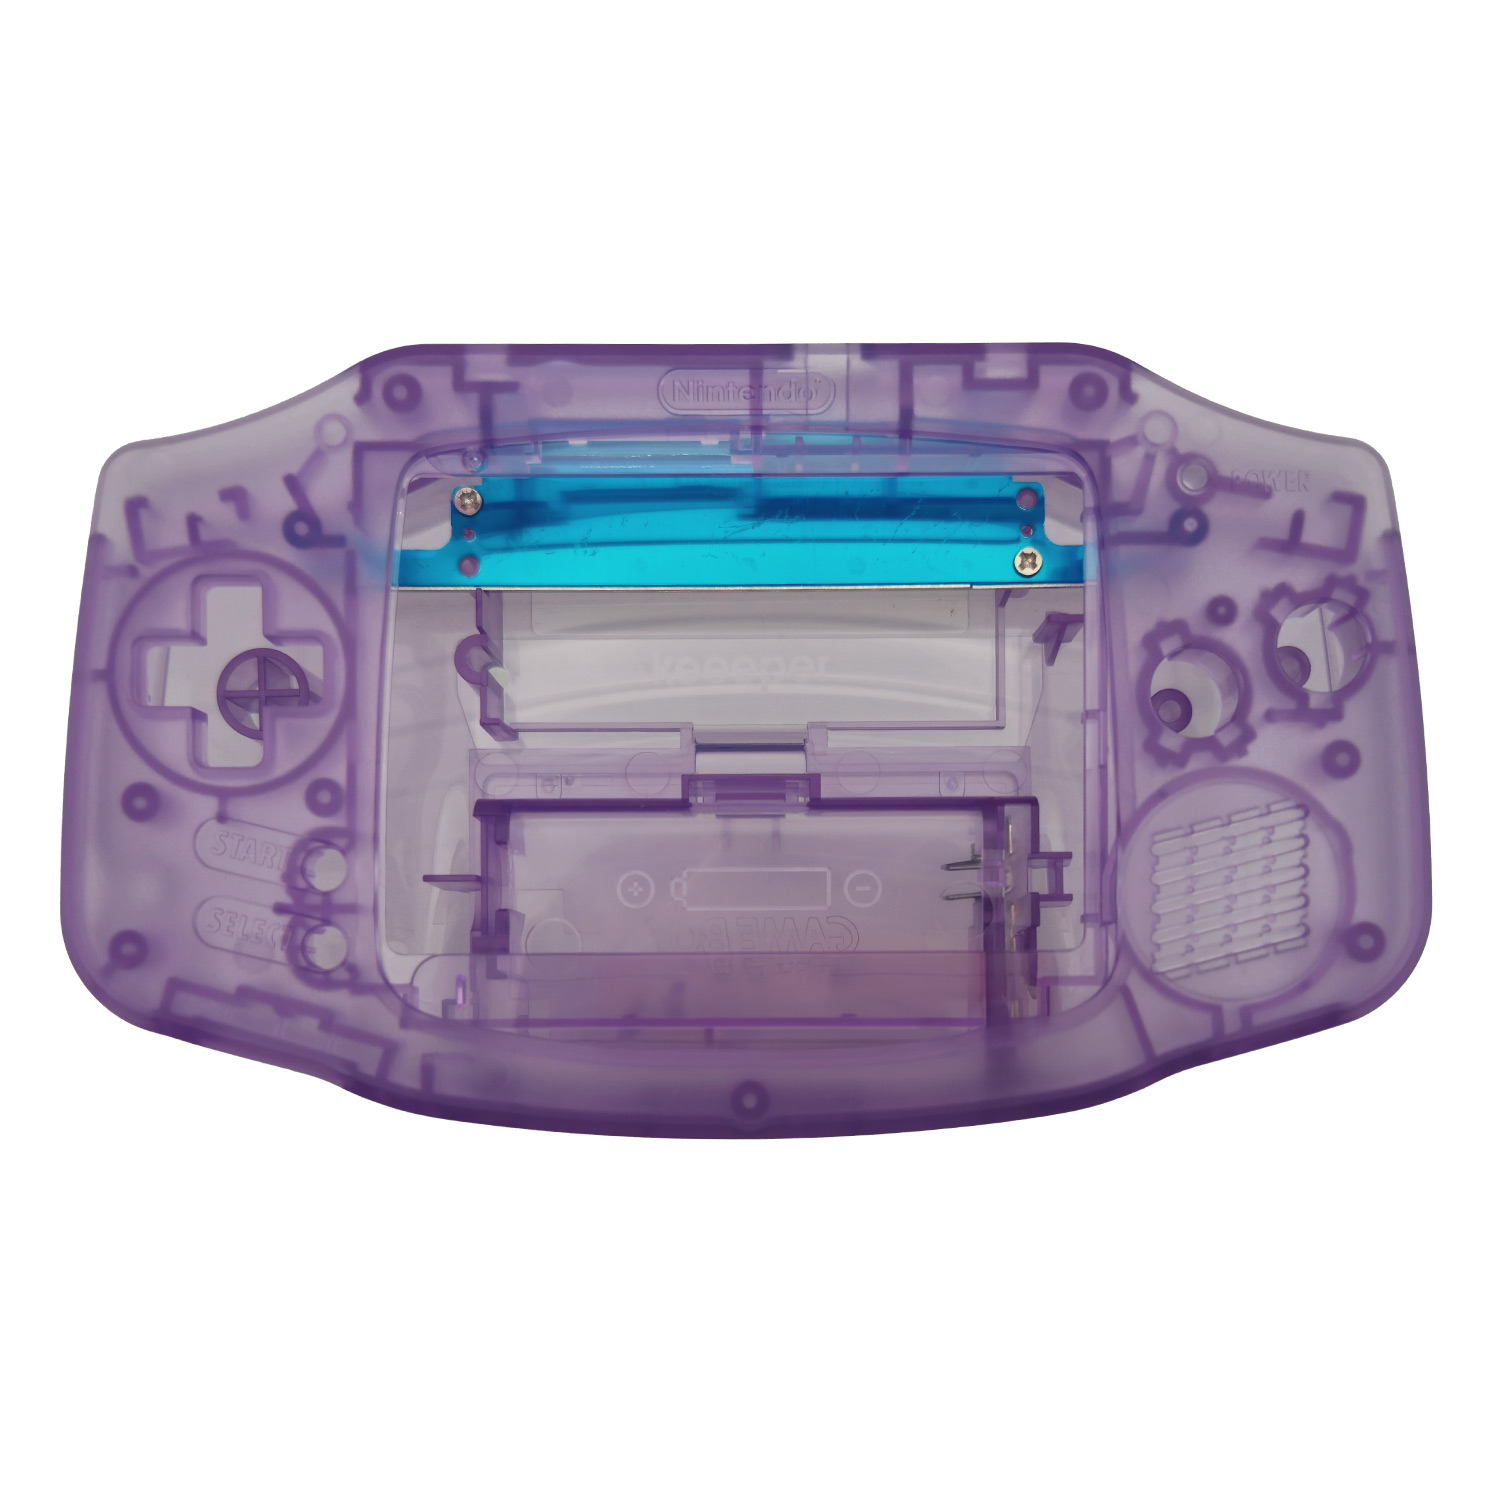 Game Boy Advance etui (Atomic Purple)